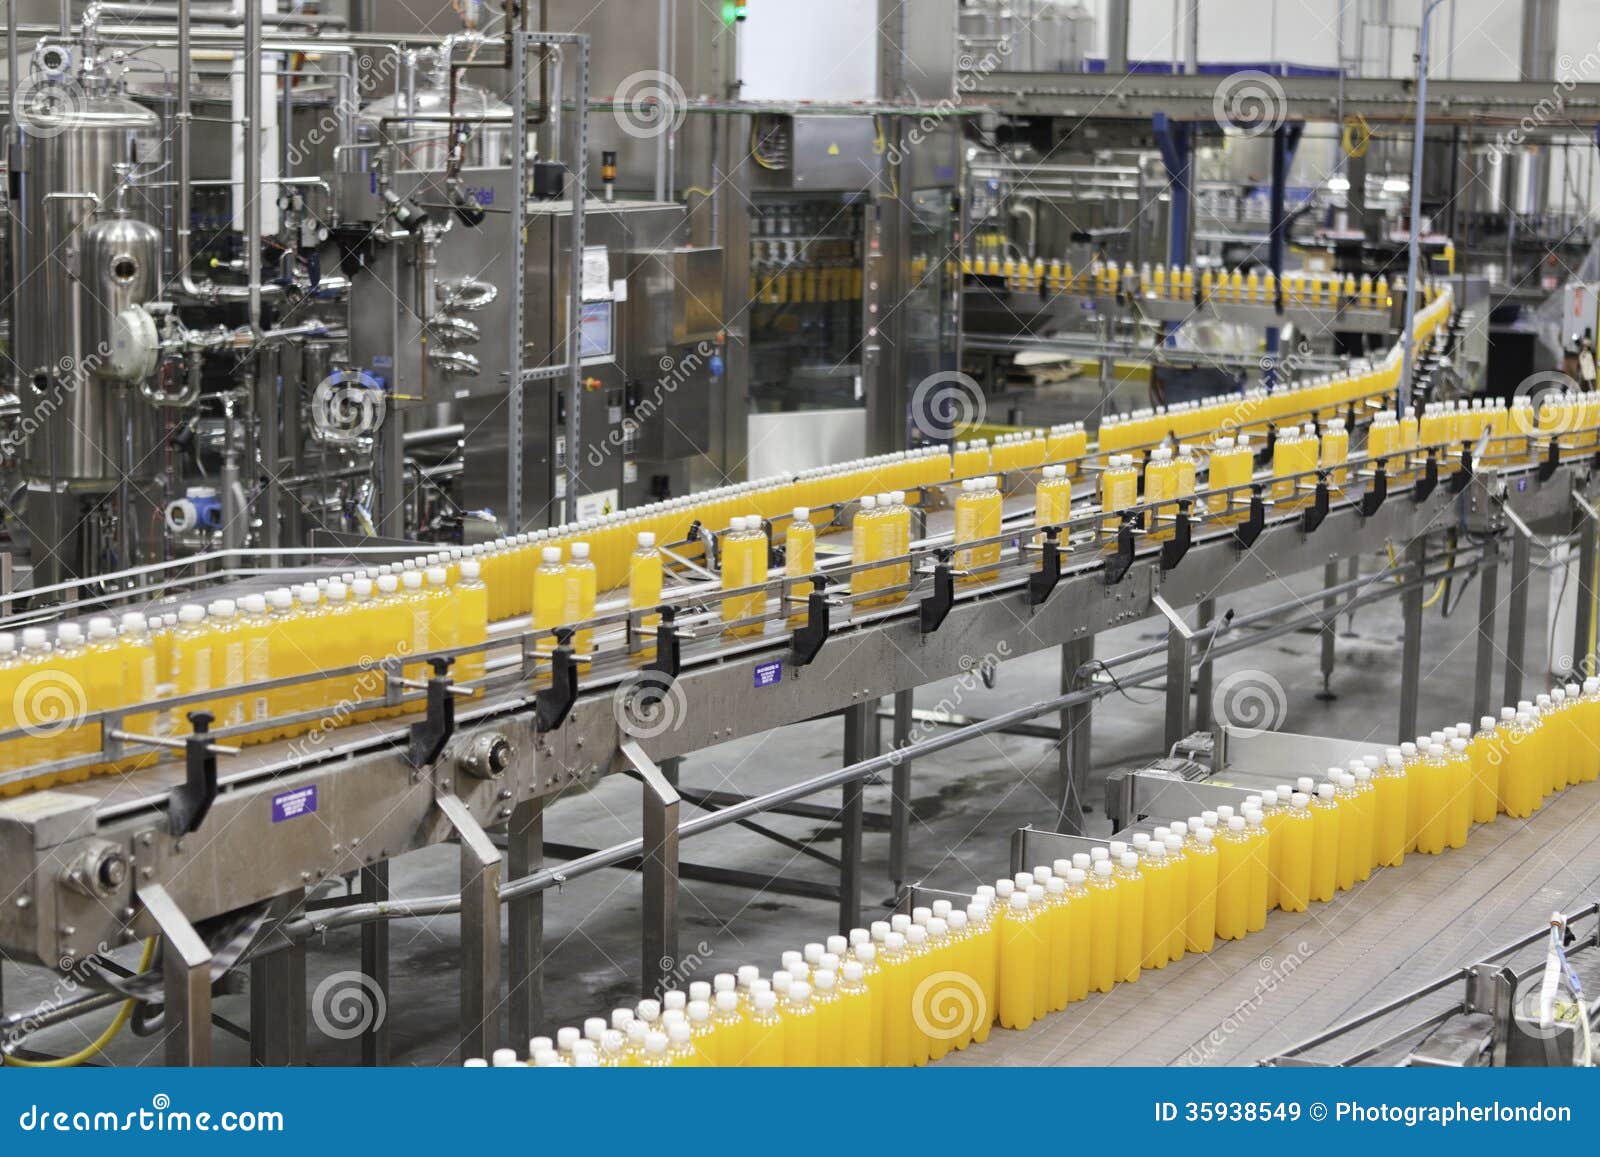 packed bottles moving on conveyor belt in bottling industry